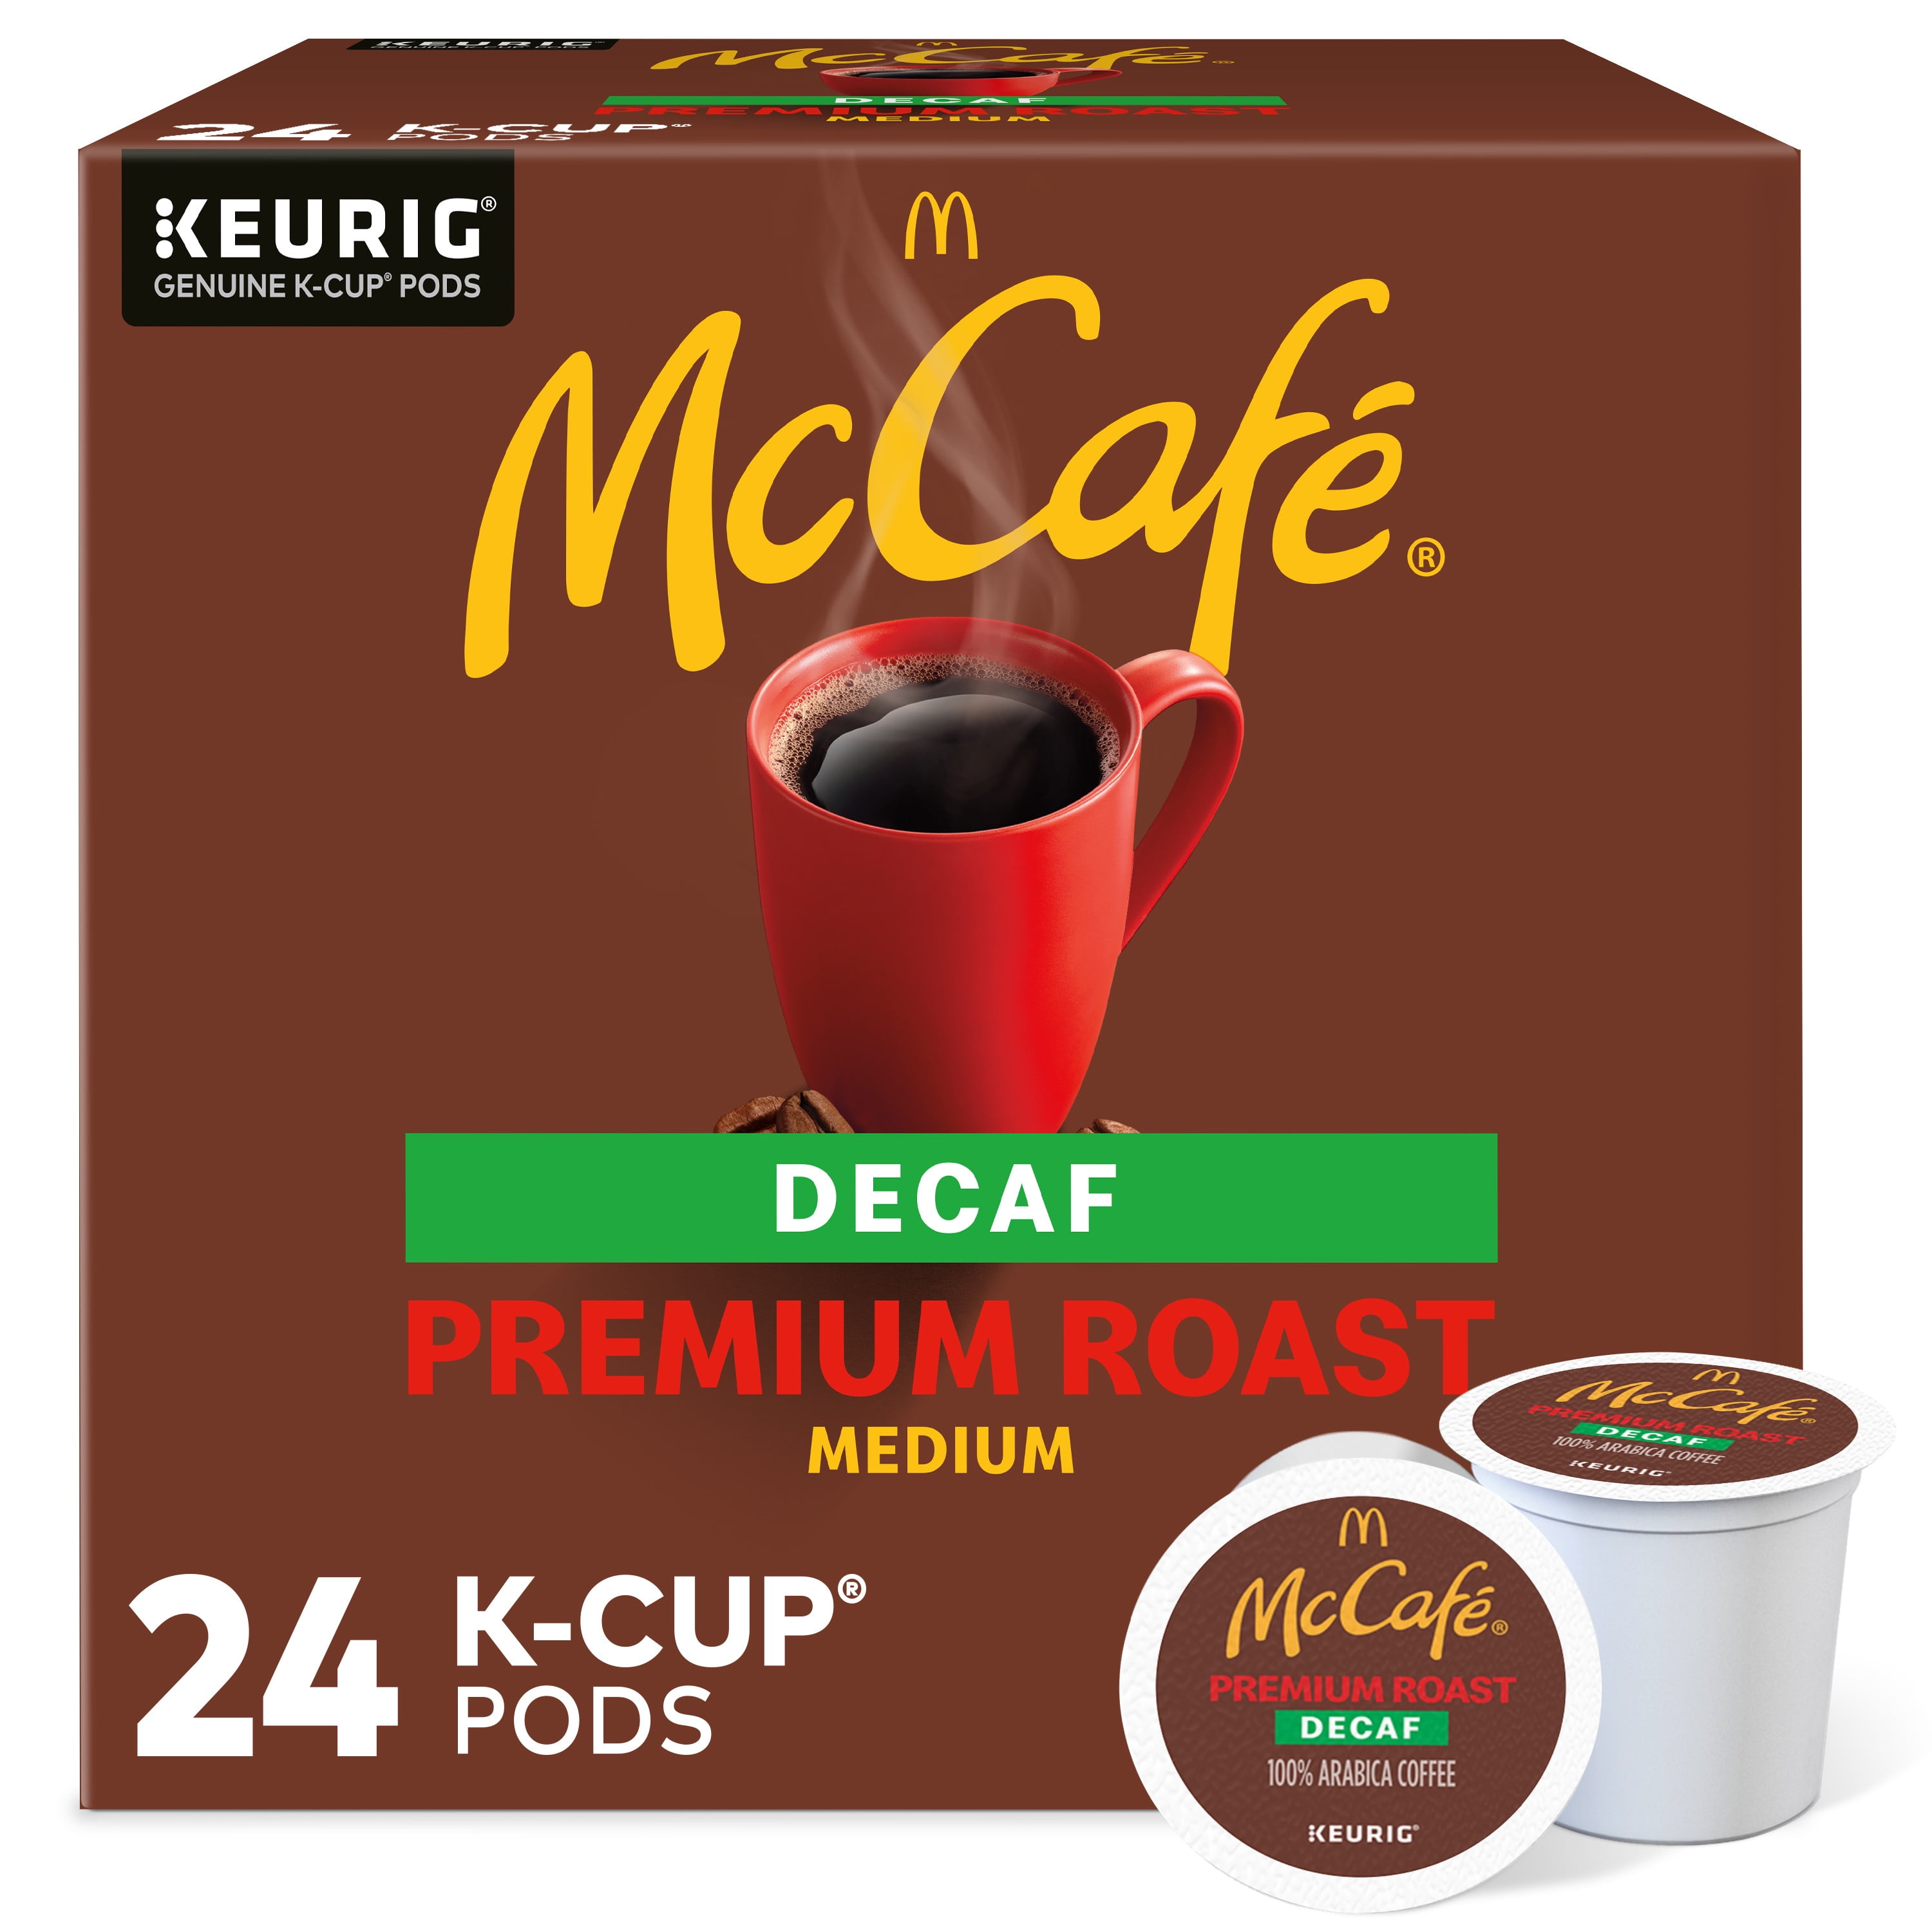 McCafe, Decaf Premium Medium Roast K-Cup Coffee Pods, 24 Count